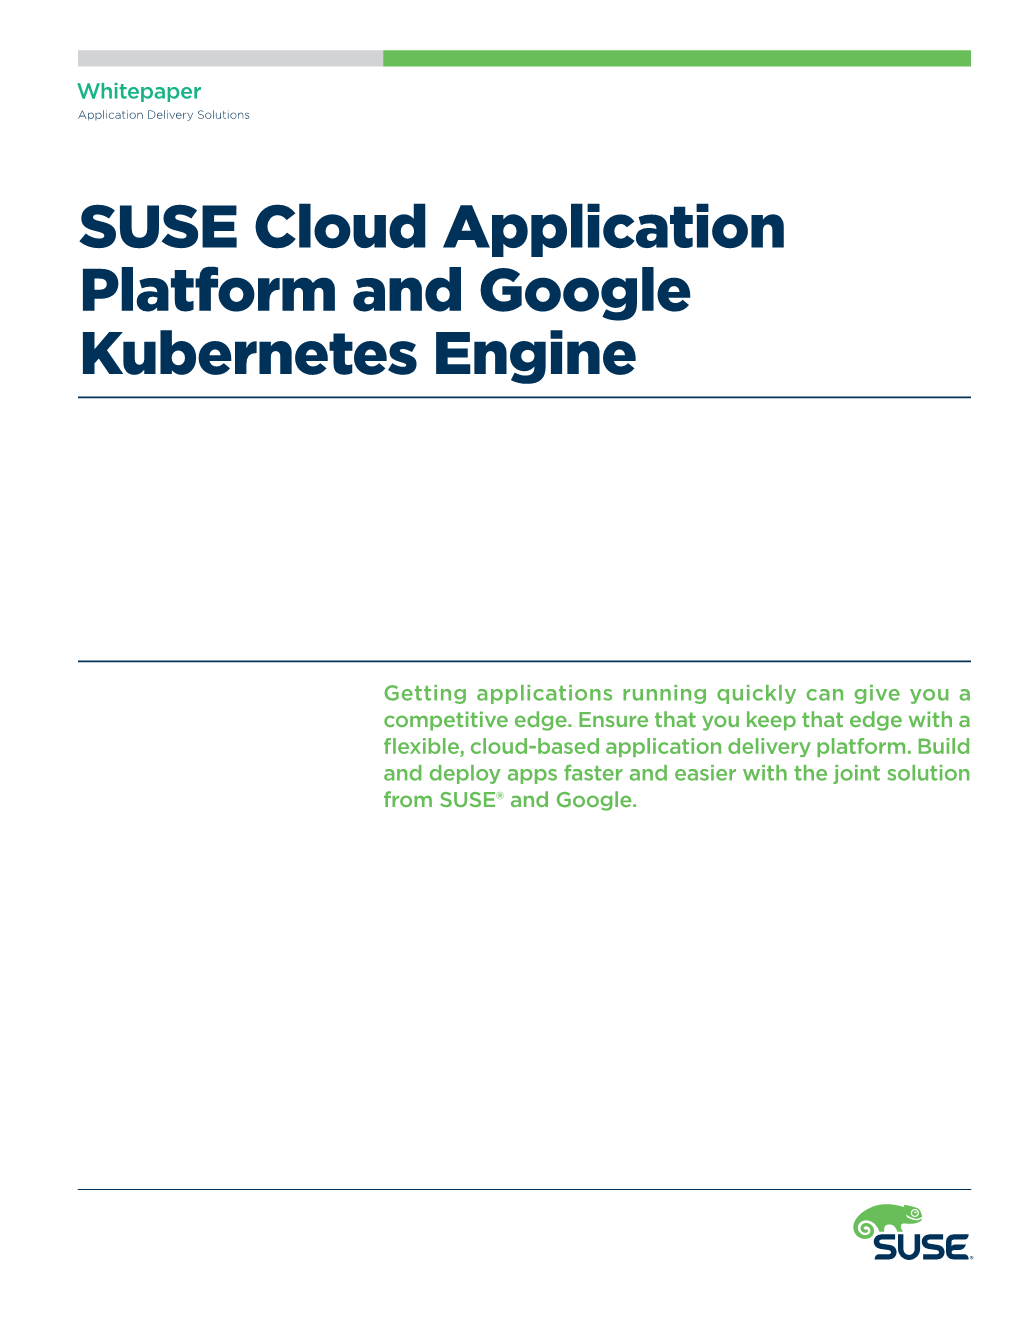 SUSE Cloud Application Platform and Google Kubernetes Engine